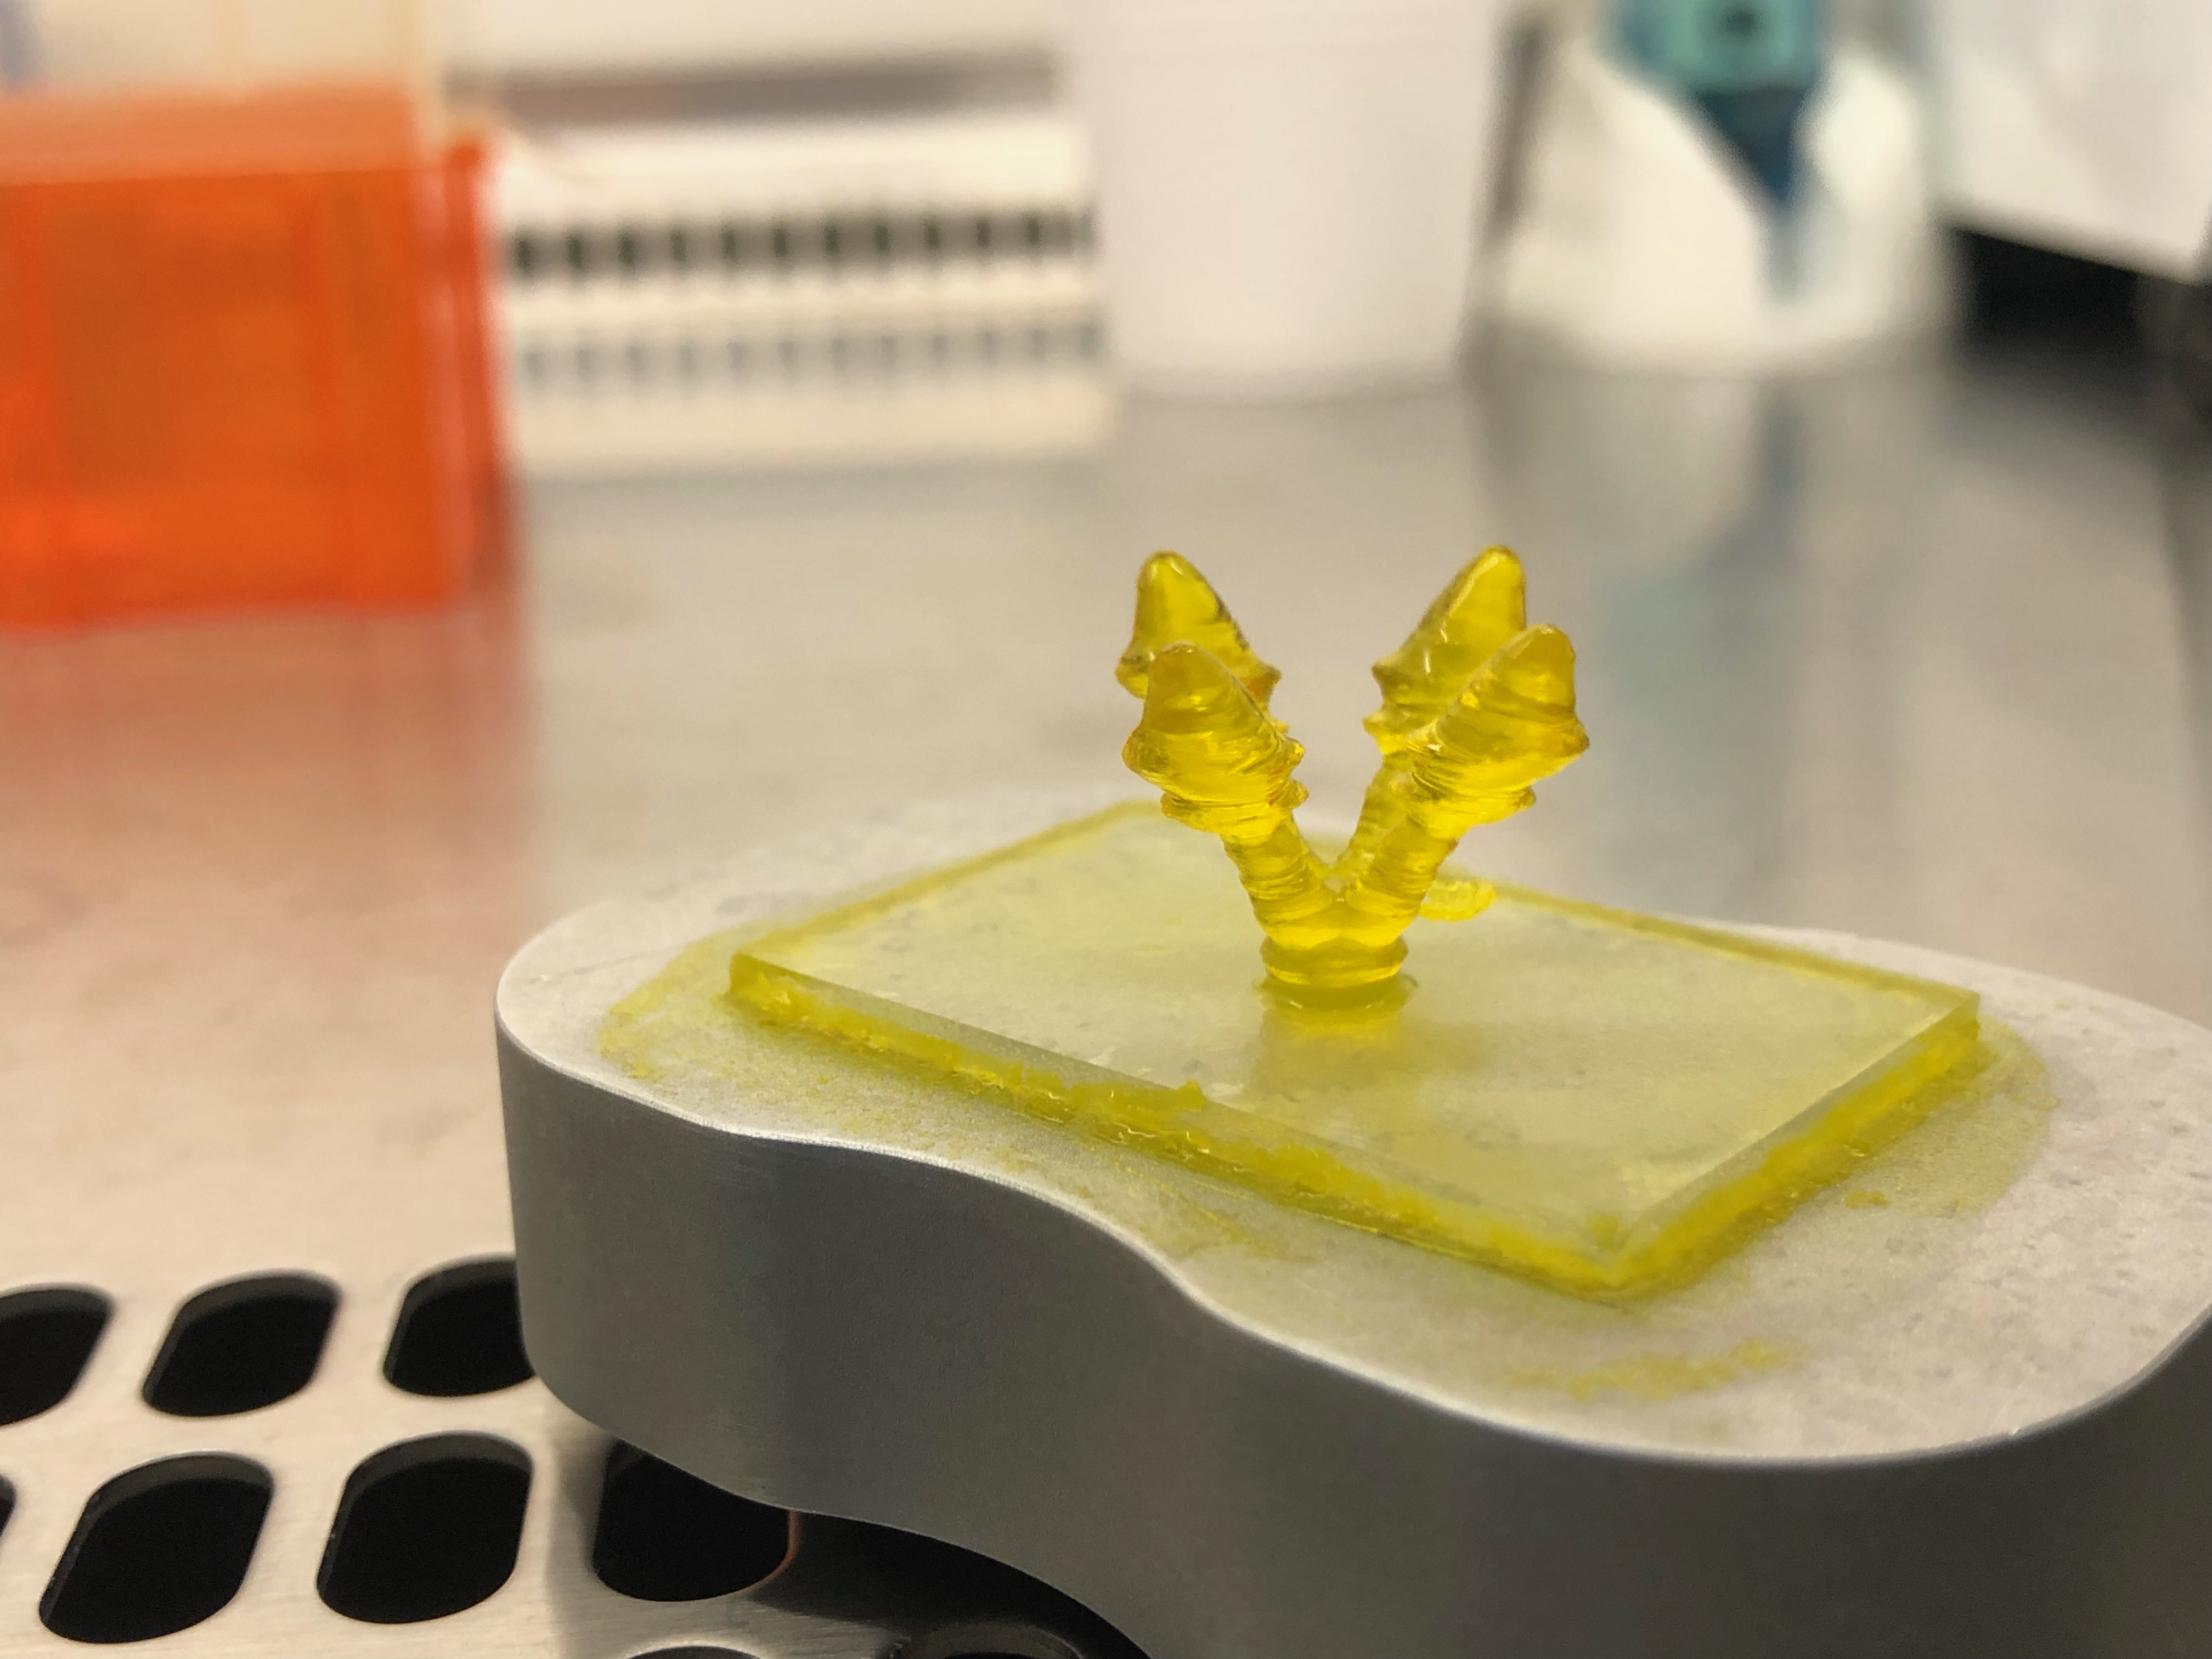 3D printed hydrogel form